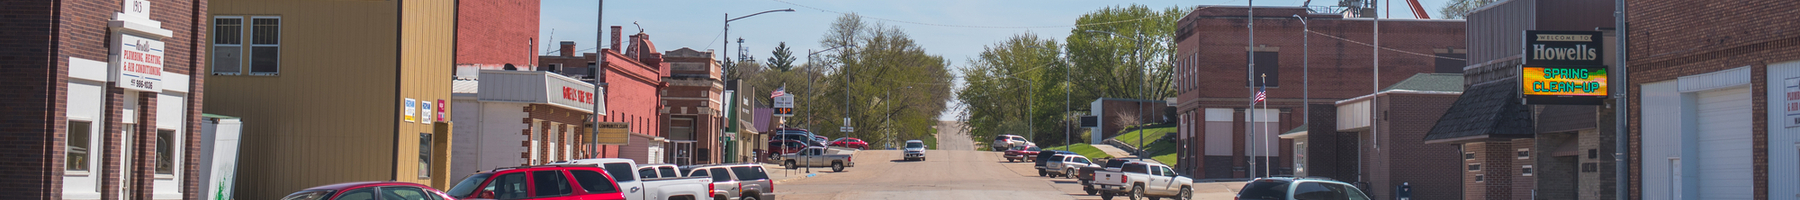 Main street in rural America